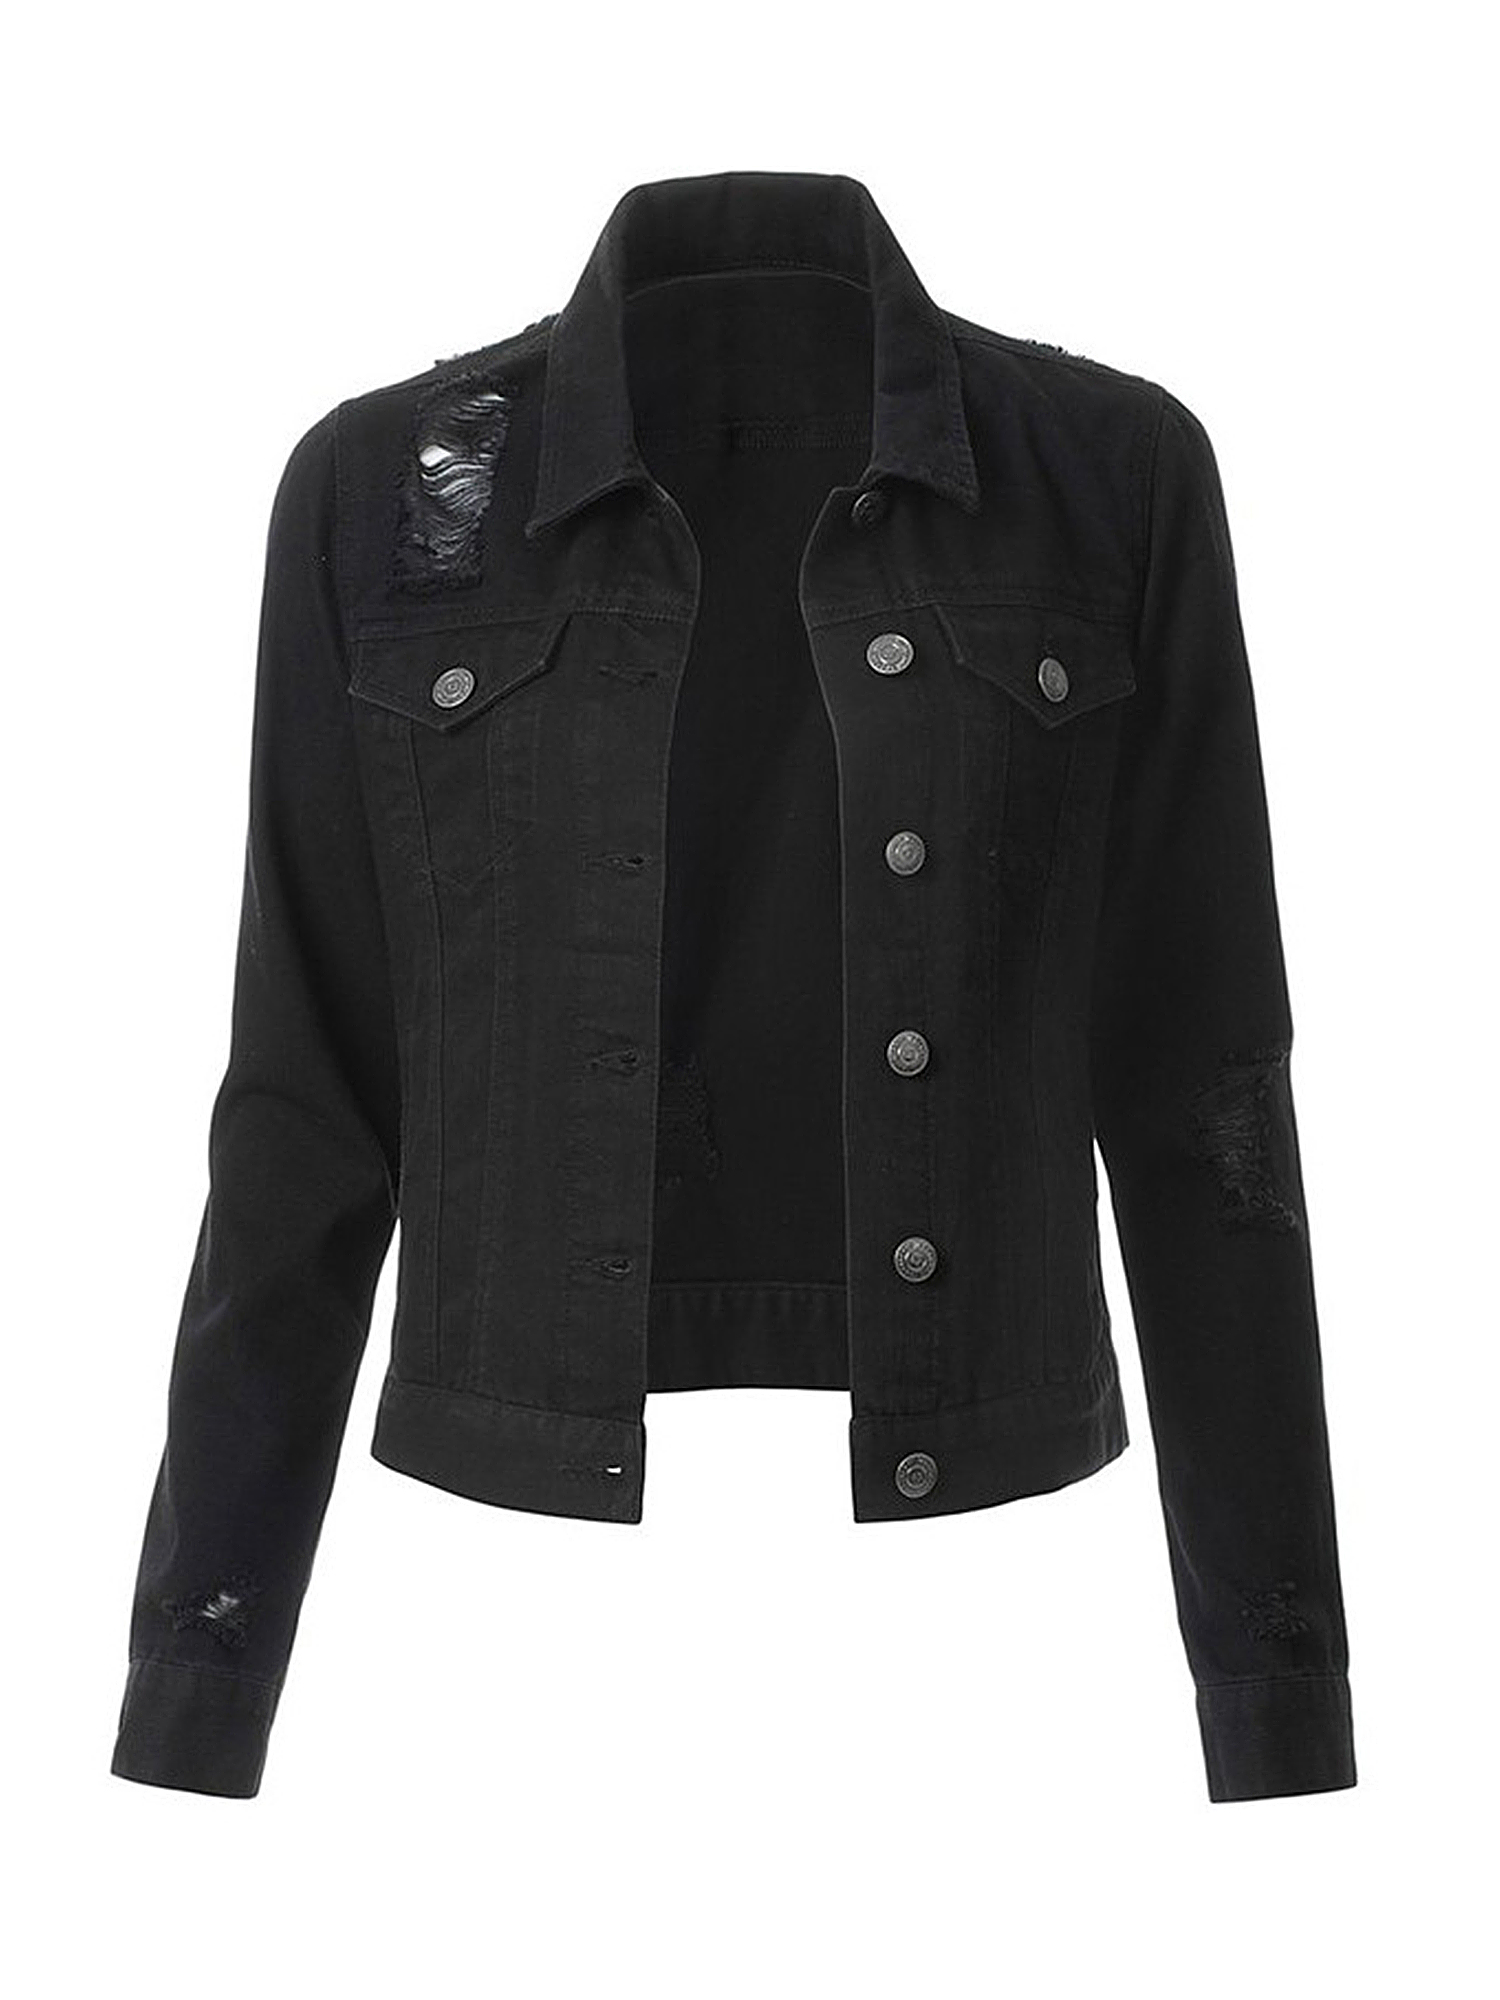 Women Casual Classic Denim Jean Jacket Oversize Vintage Distressed Ripped Denim Outwear Long Sleeve Boyfriend Denim Jacket Coat - image 1 of 2